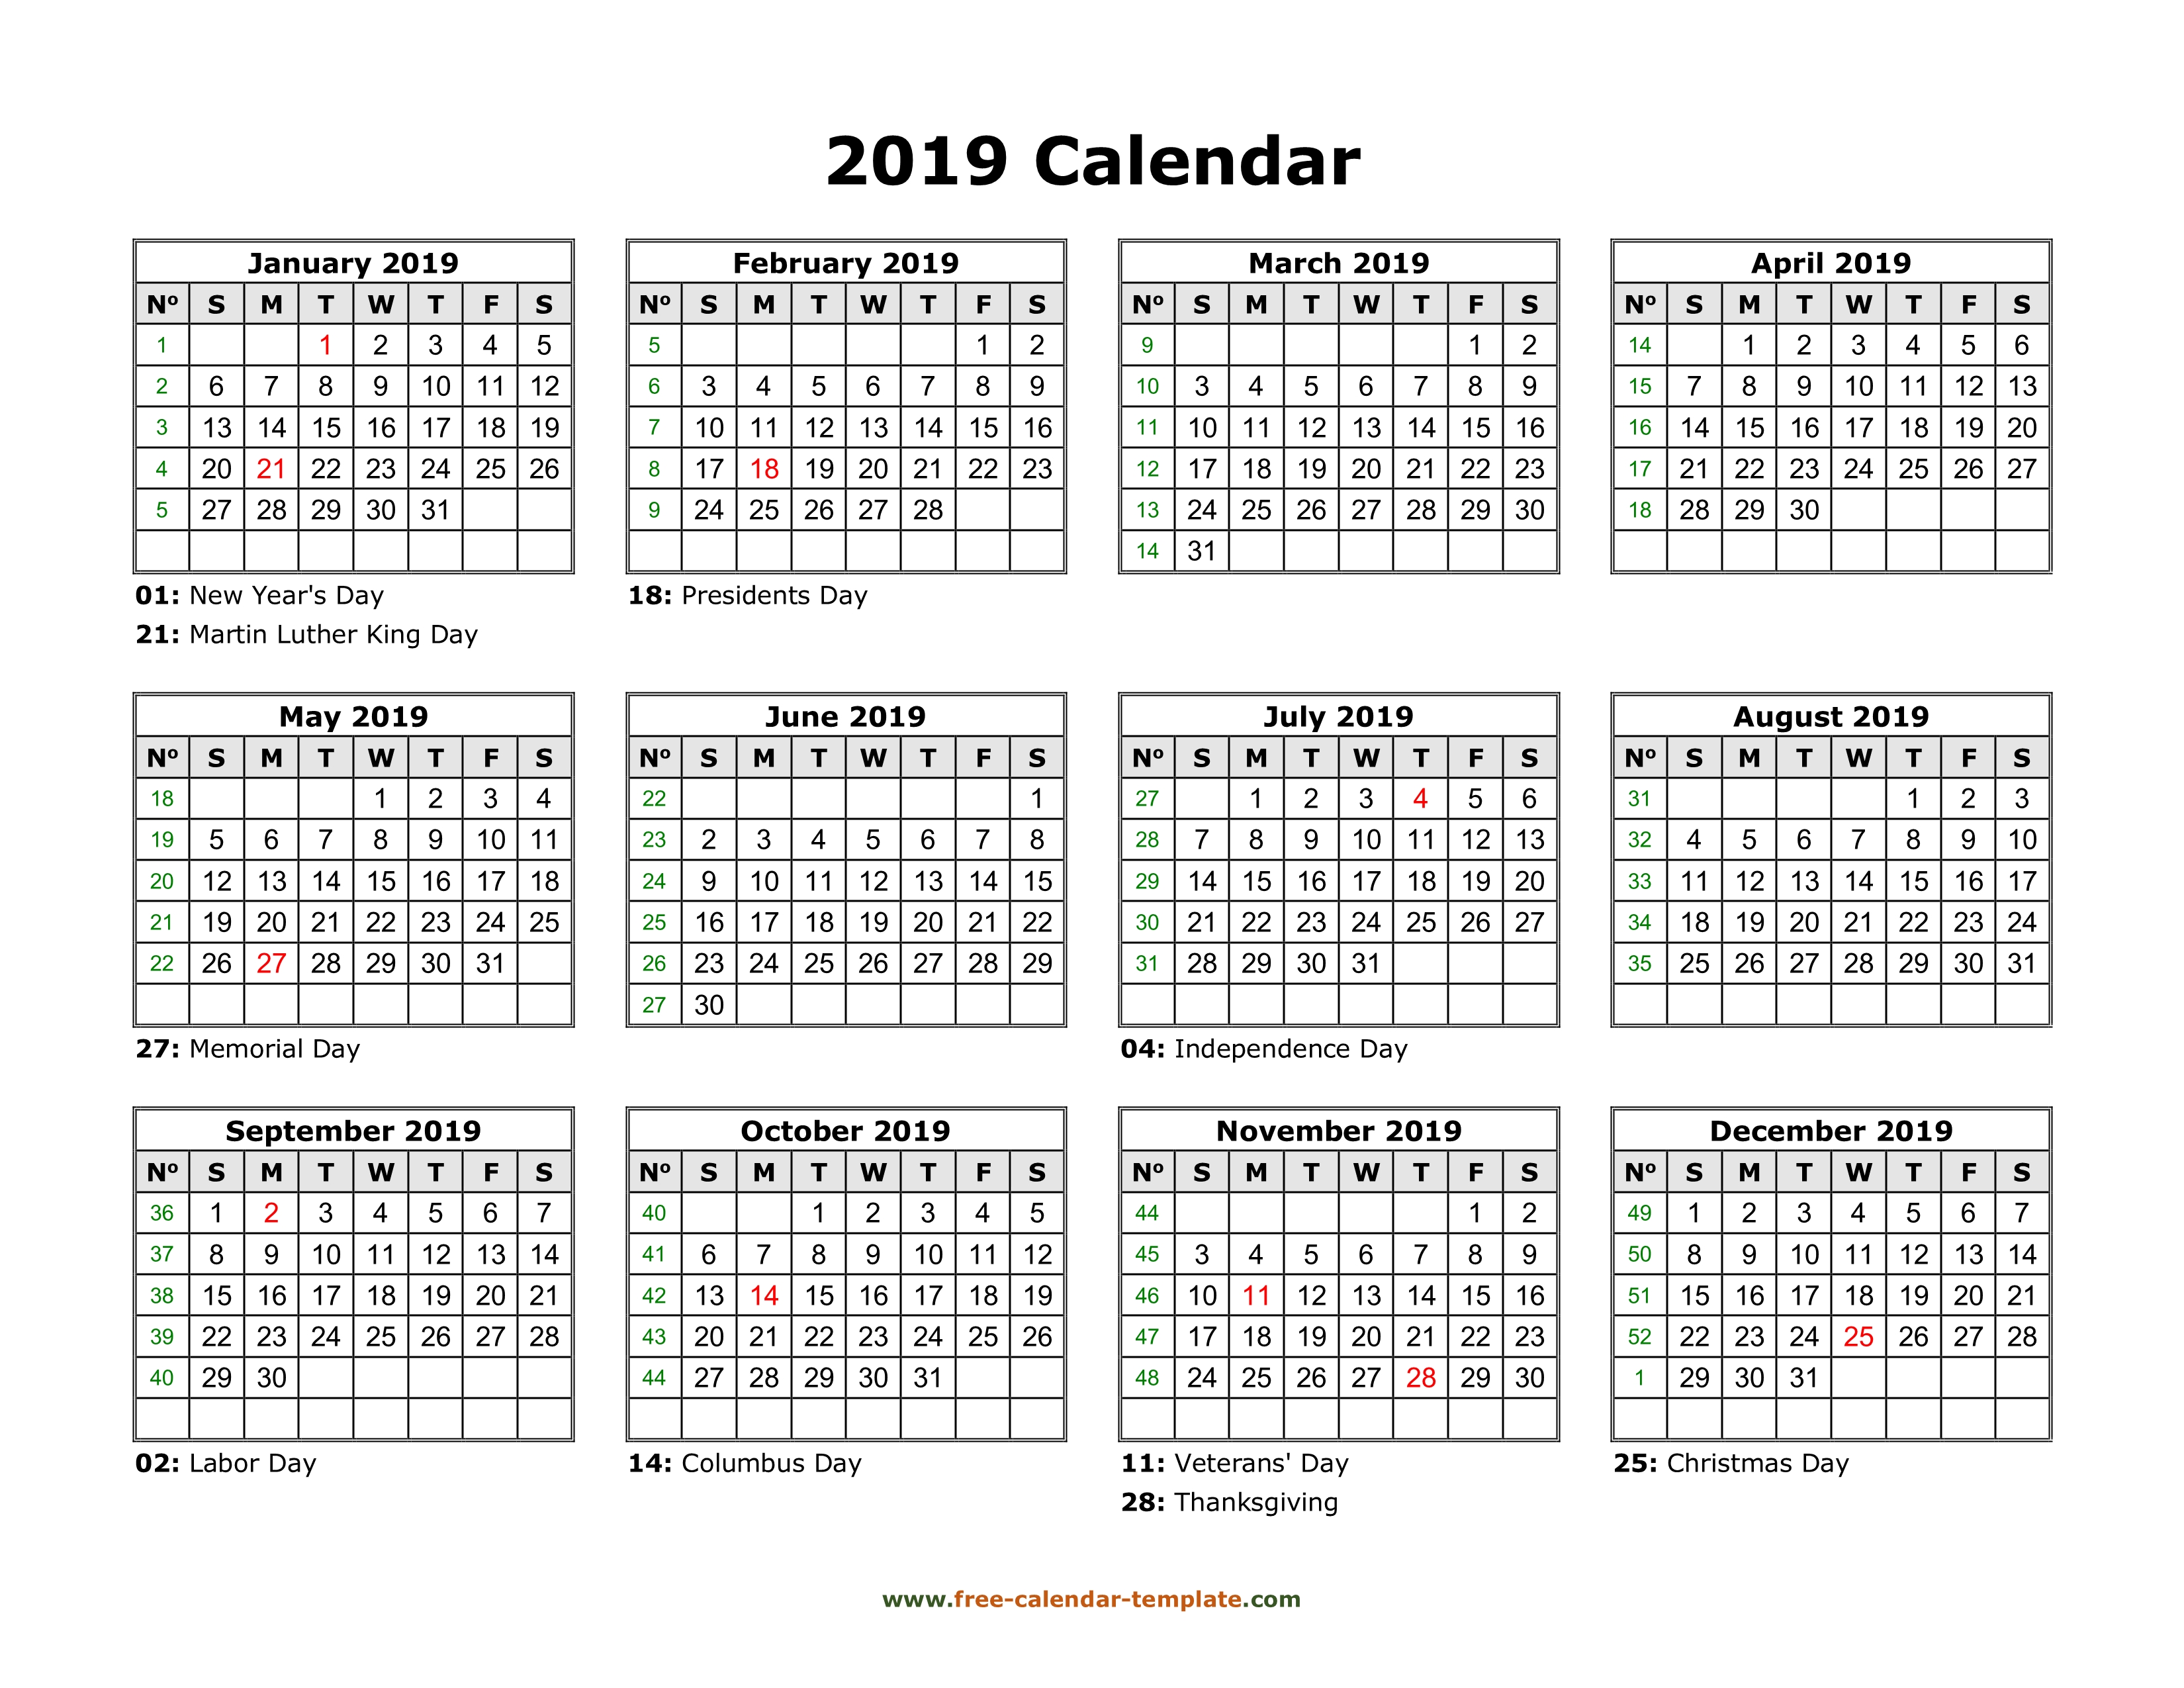 Printable 2019 Calendar Template from www.free-calendar-template.com